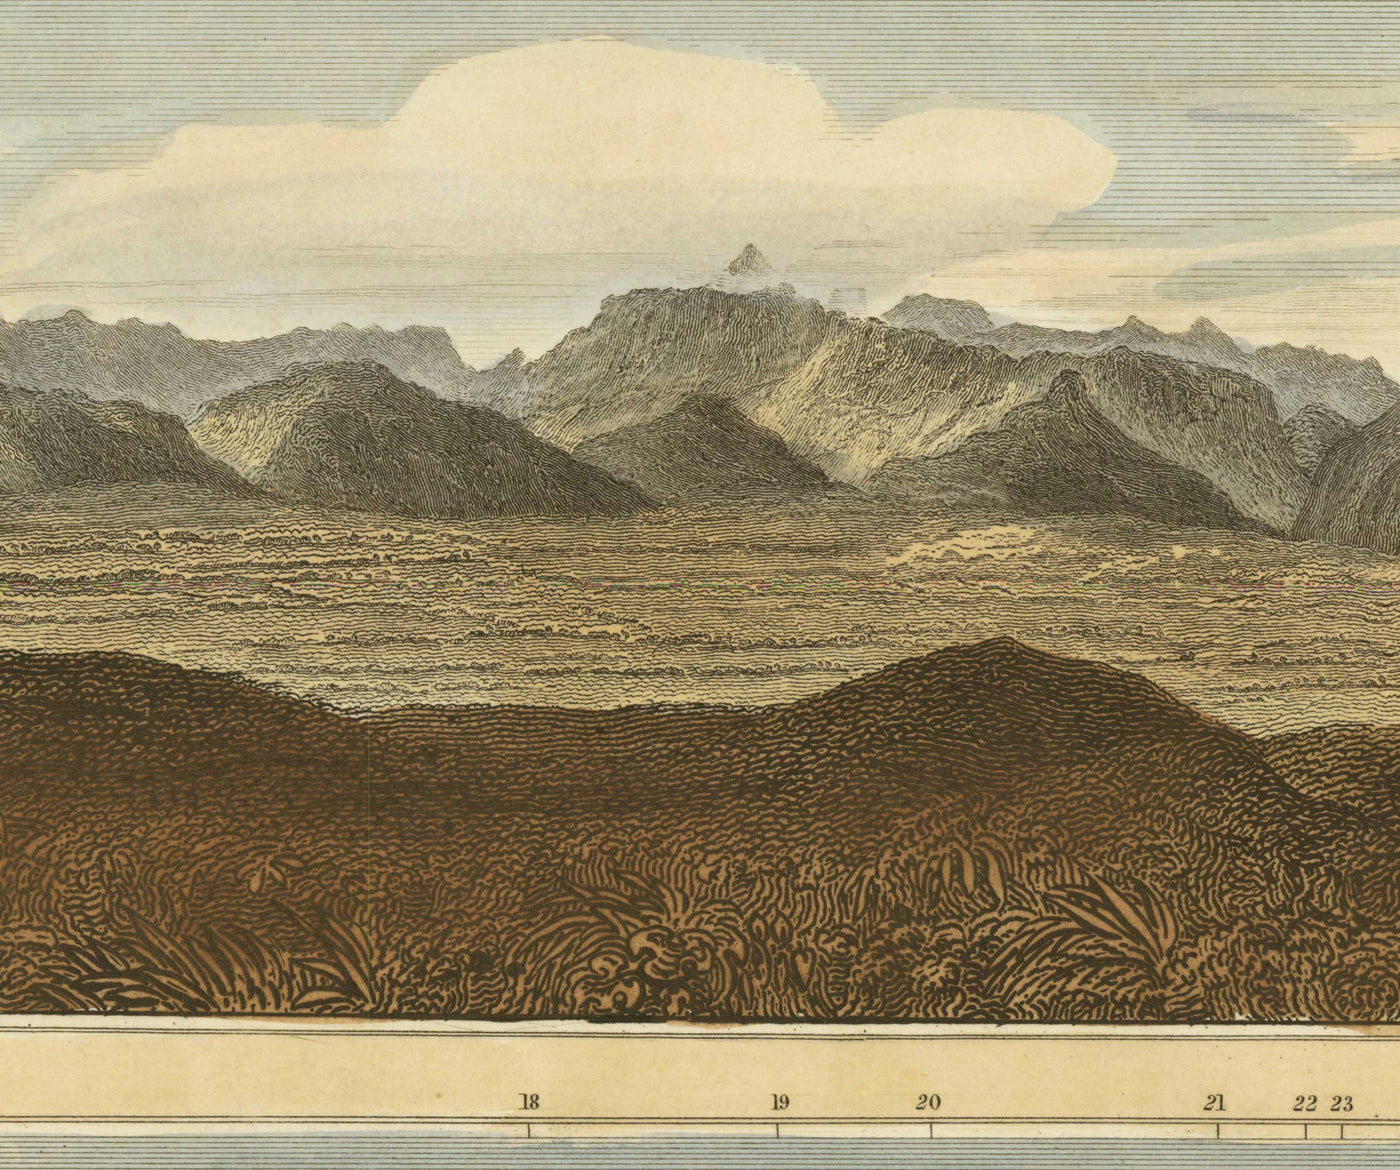 Old Map of the Hills of Scotland in 1832 by John Thomson - The Highlands, Ben Nevis, Loch na Garr, Cairngorms, Ben Macdui, Ben Venue